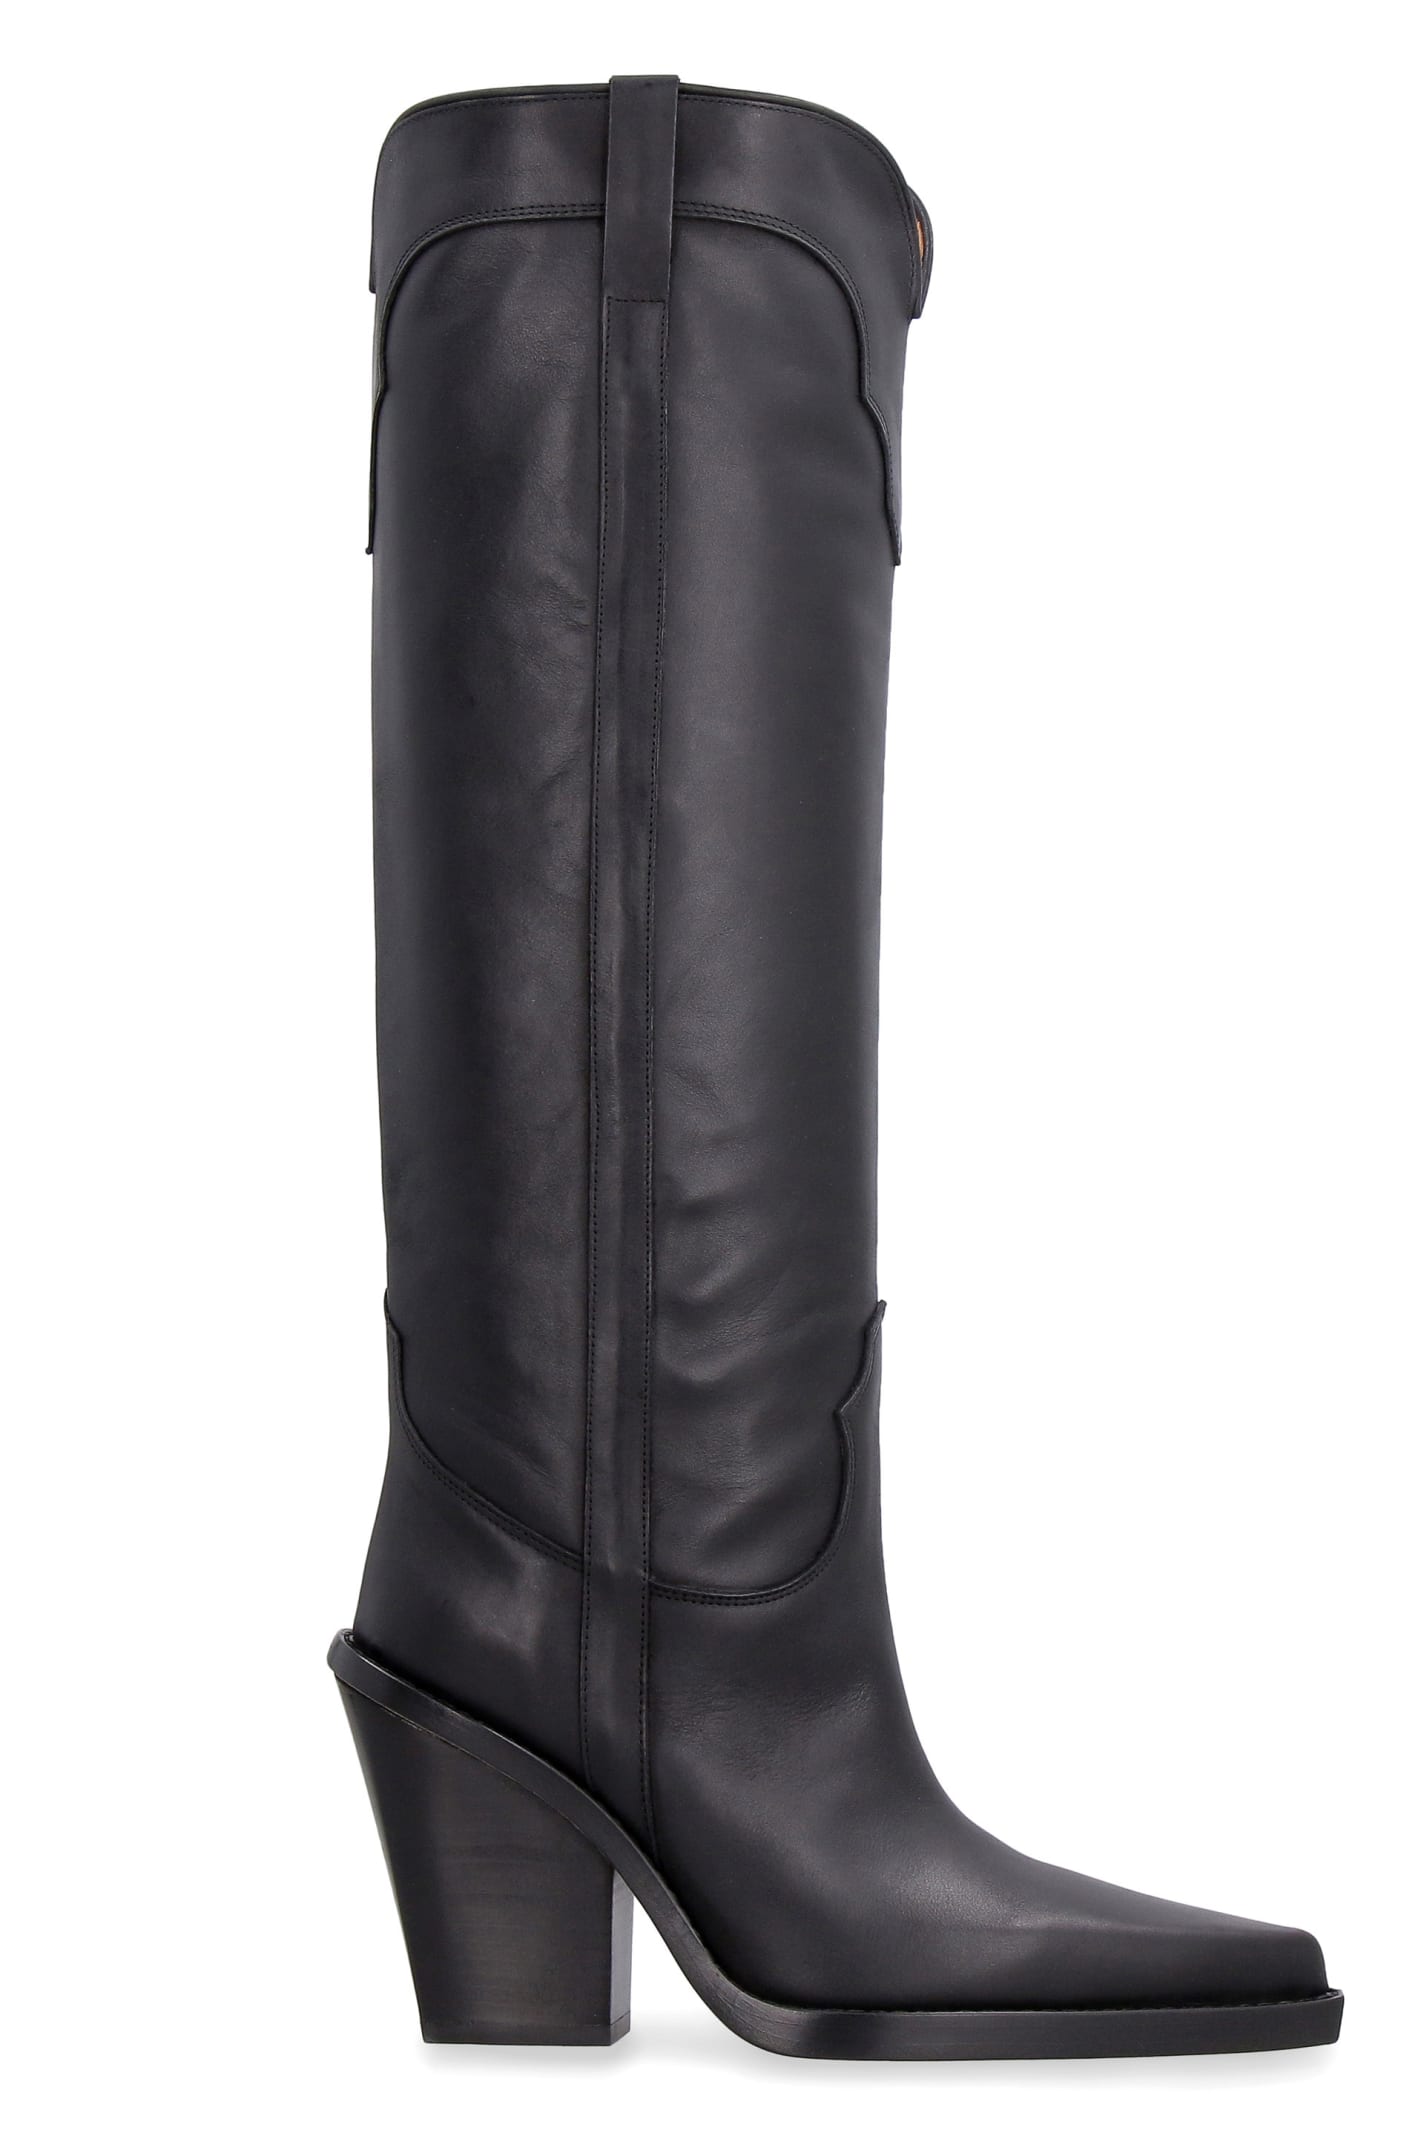 Paris Texas Thigh-length Leather Hose Boots